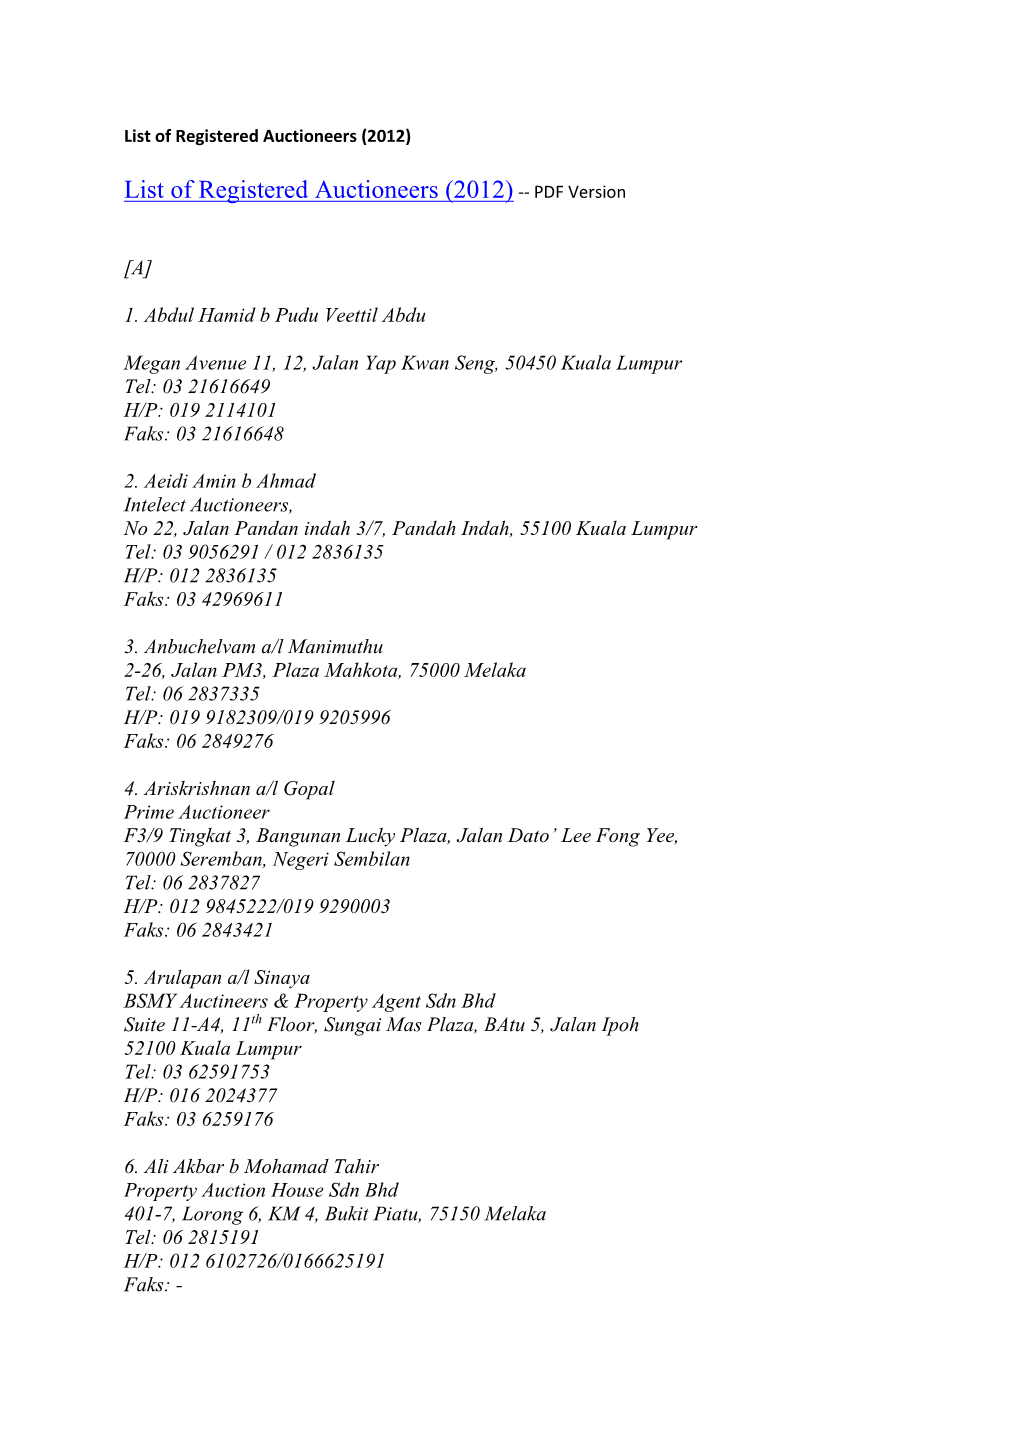 List of Registered Auctioneers (2012) -- PDF Version